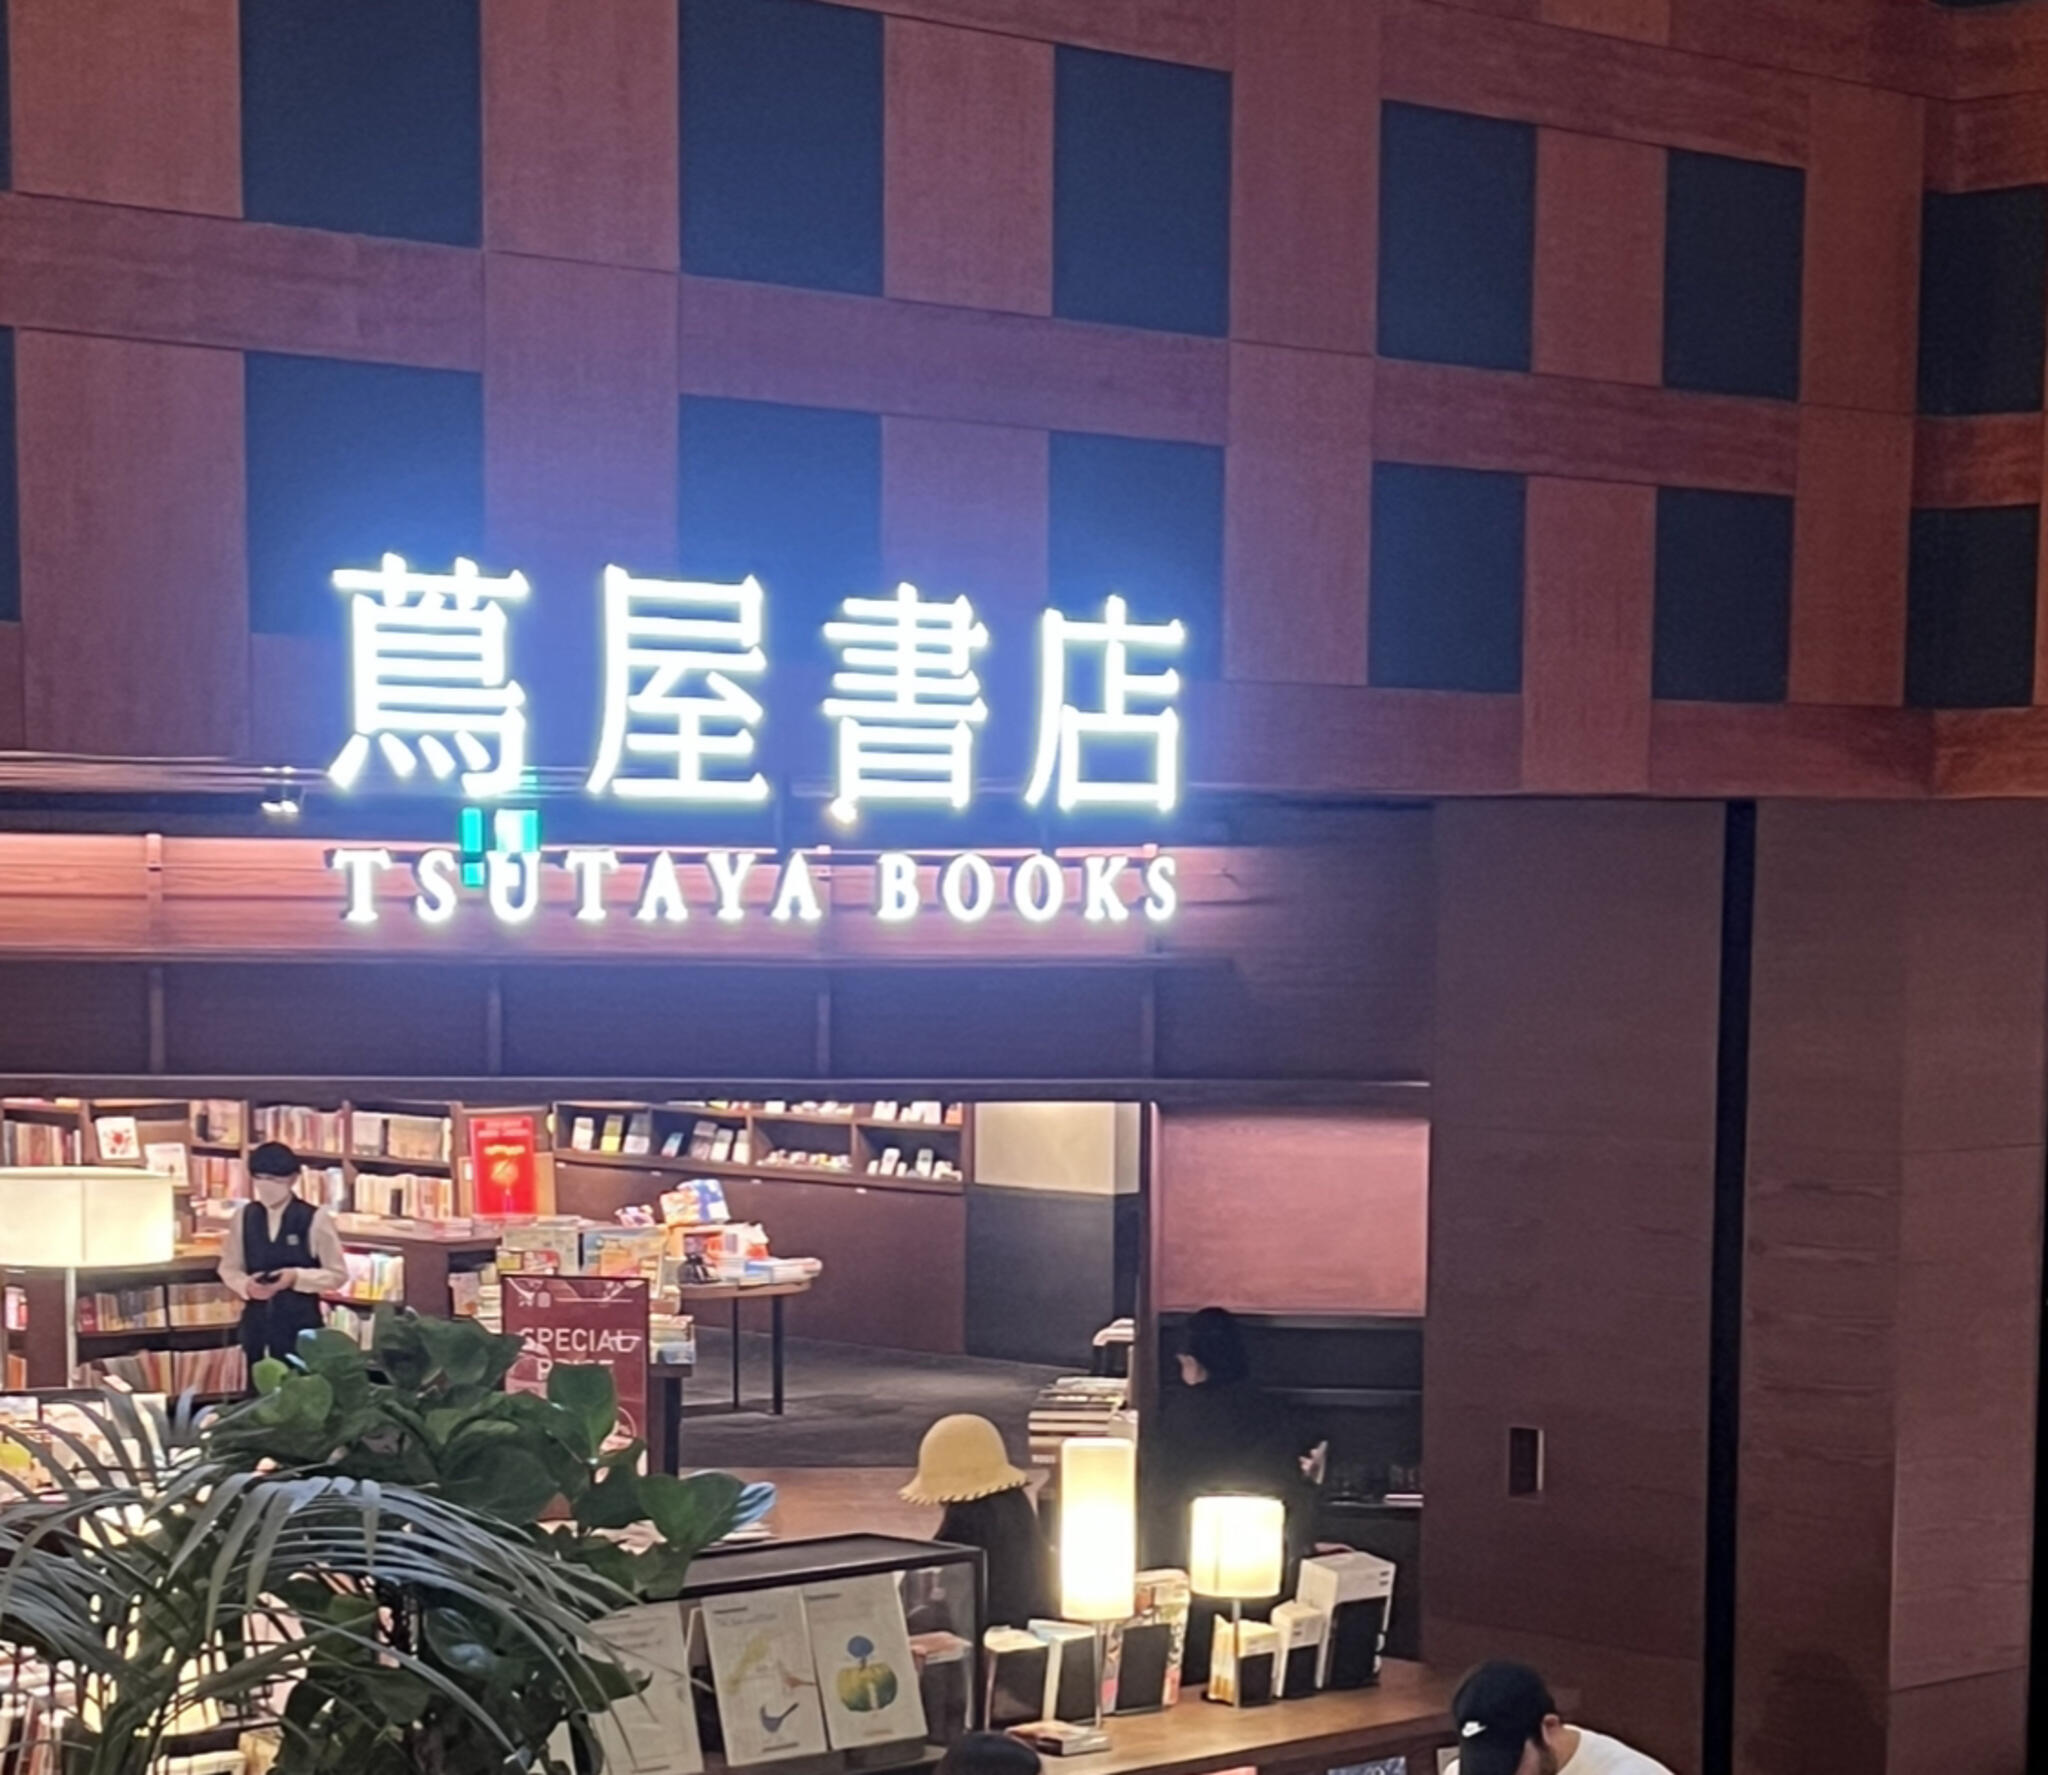 TSUTAYA BOOK 梅田 蔦屋書店の代表写真10